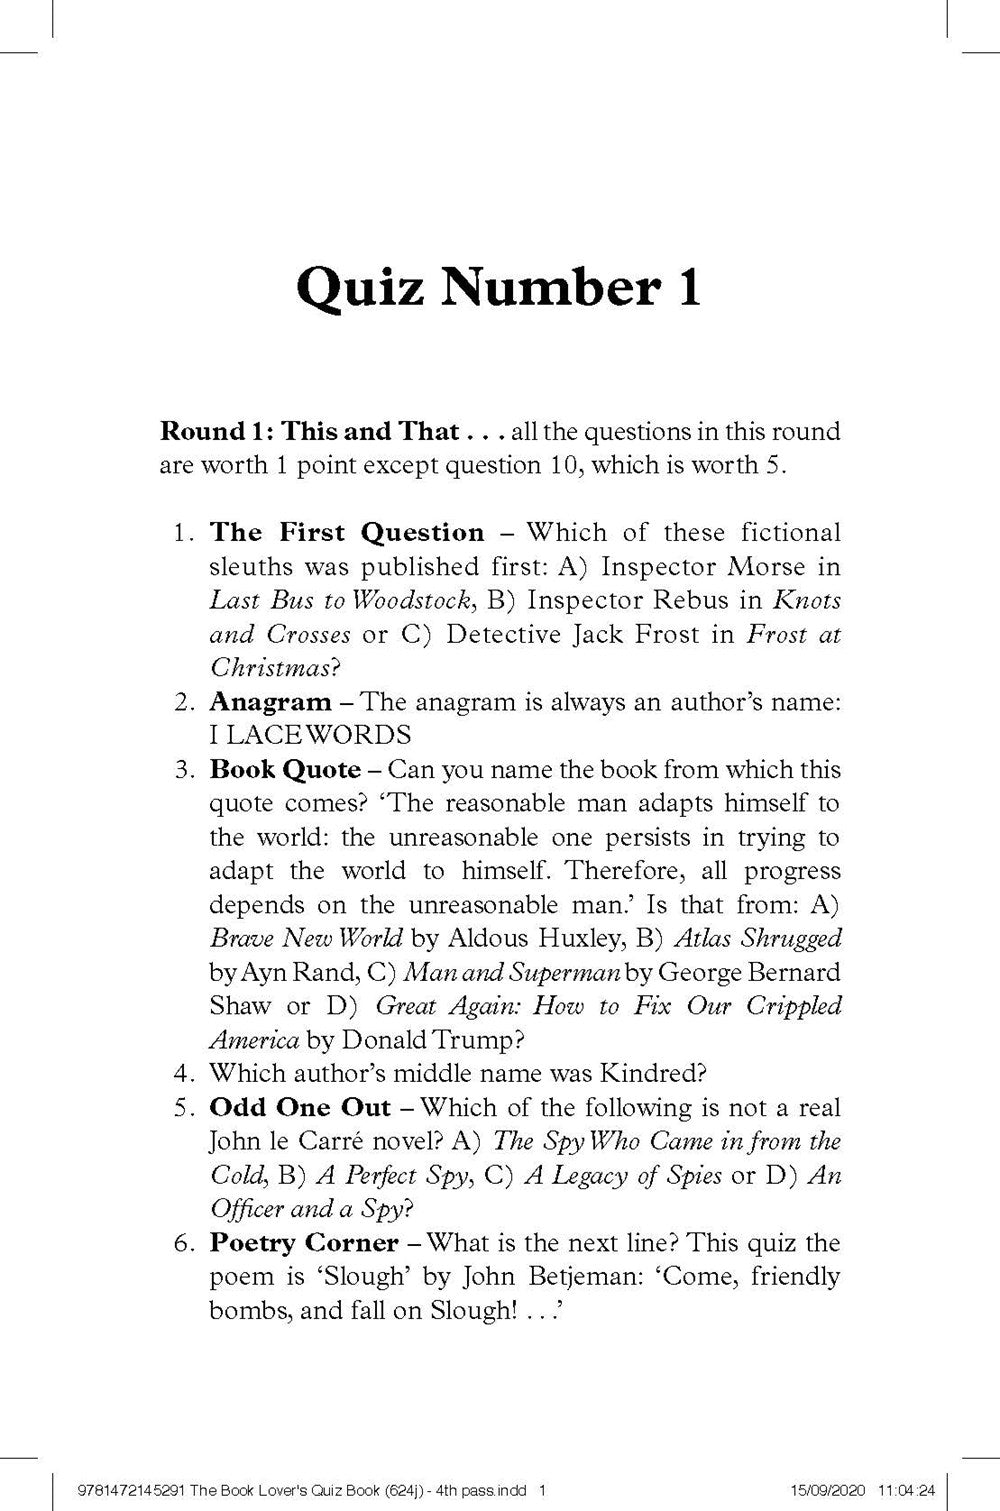 The Book Lover's Quiz Book: Novel Conundrums